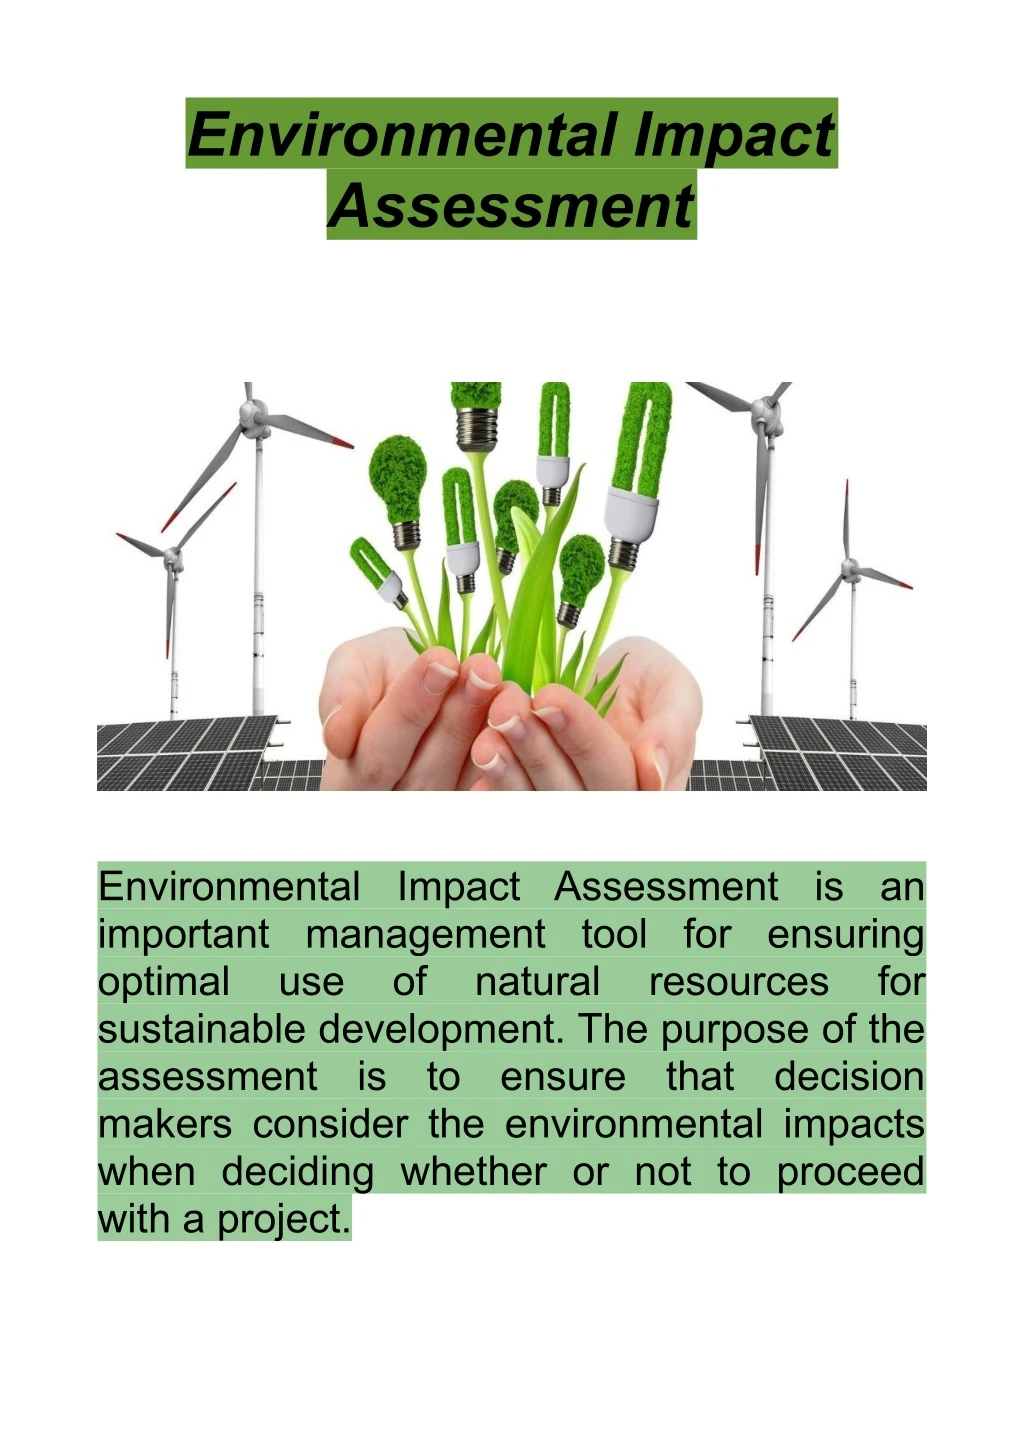 environmental impact assessment